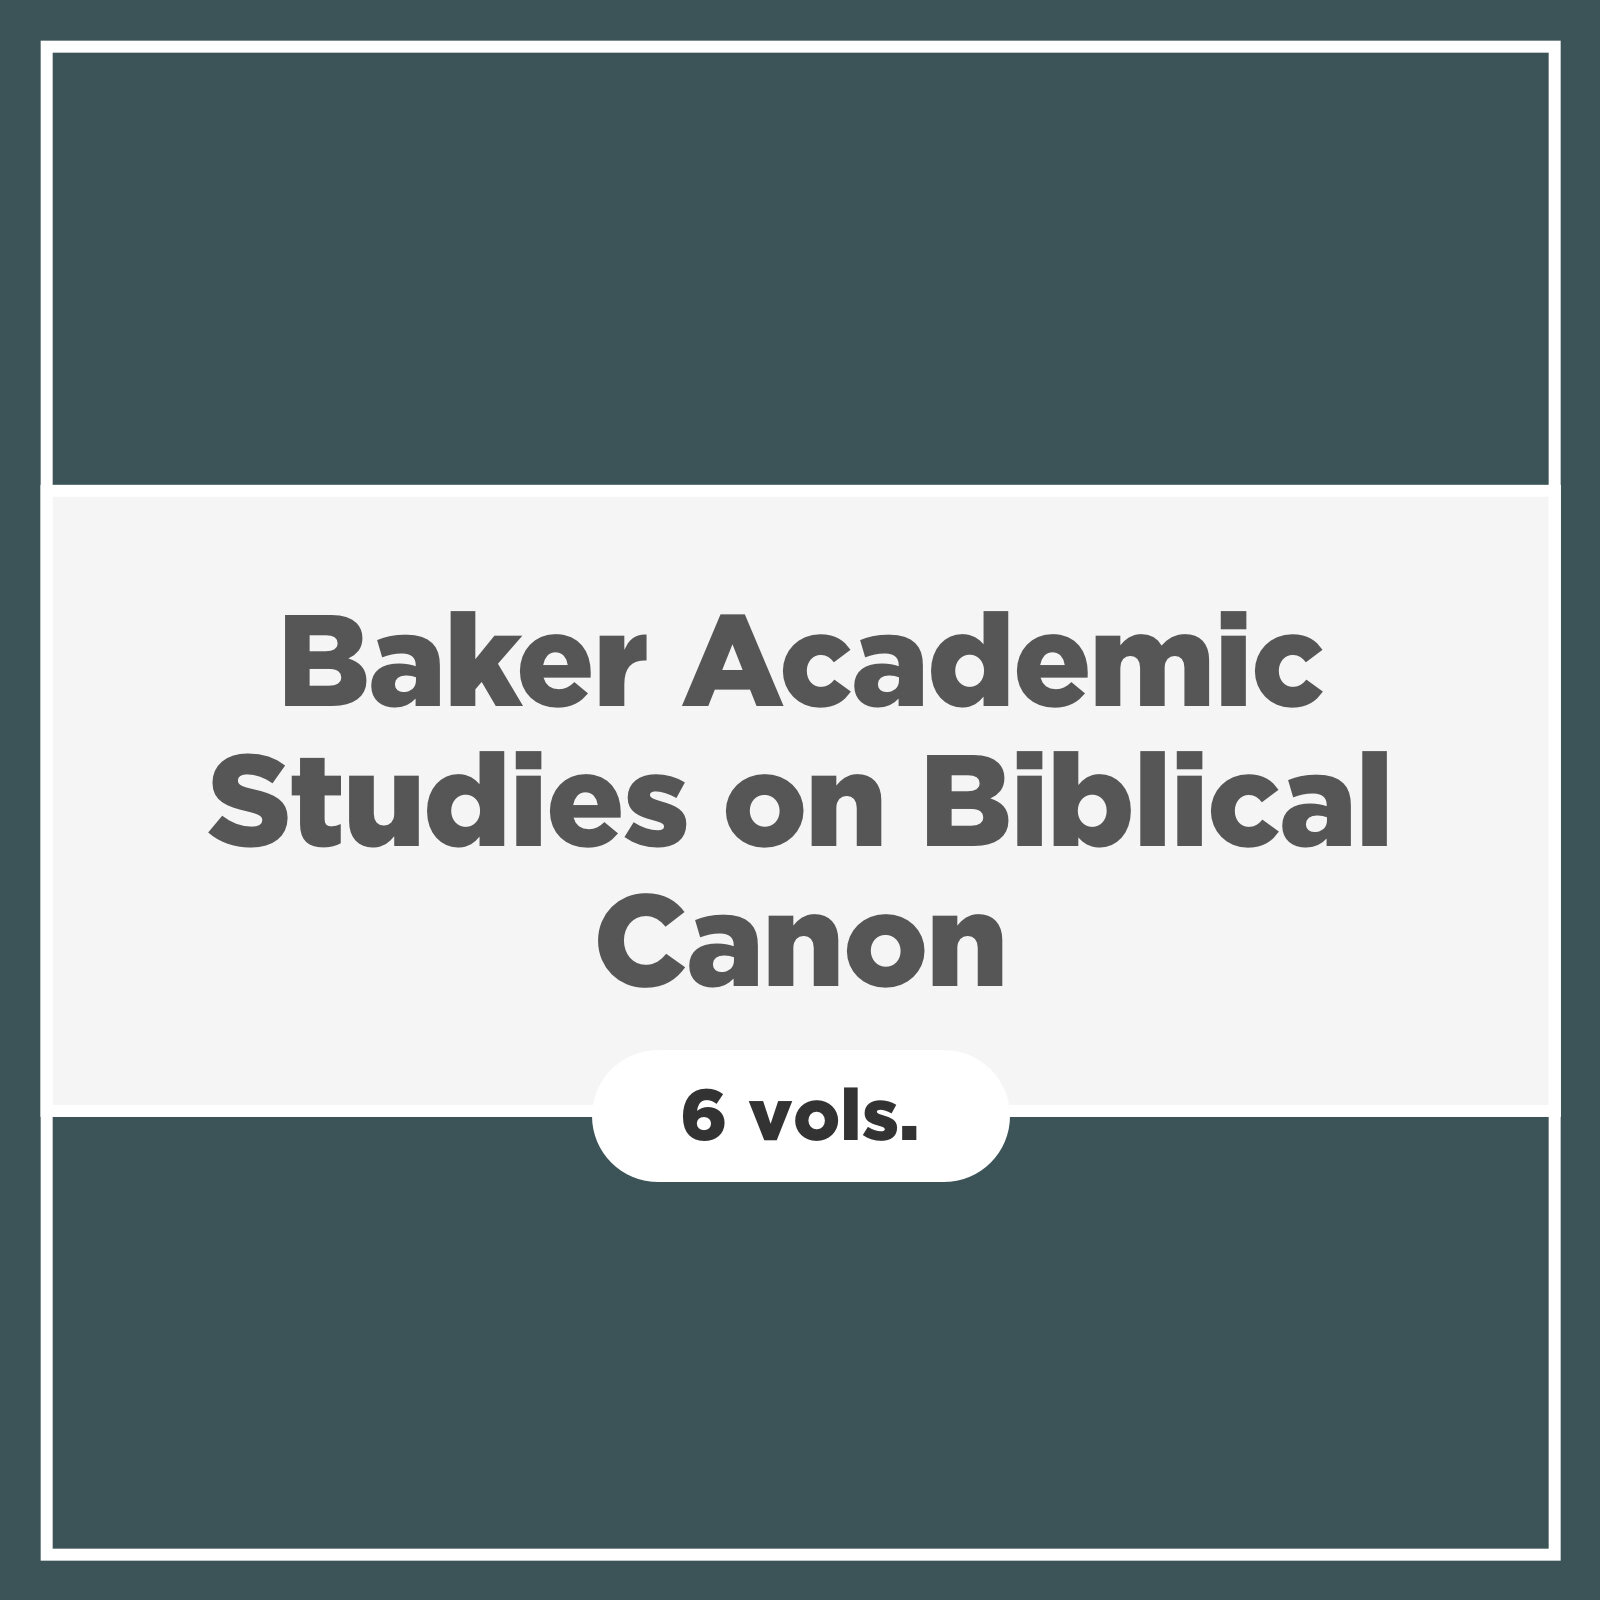 Baker Academic Studies on Biblical Canon (6 vols.)